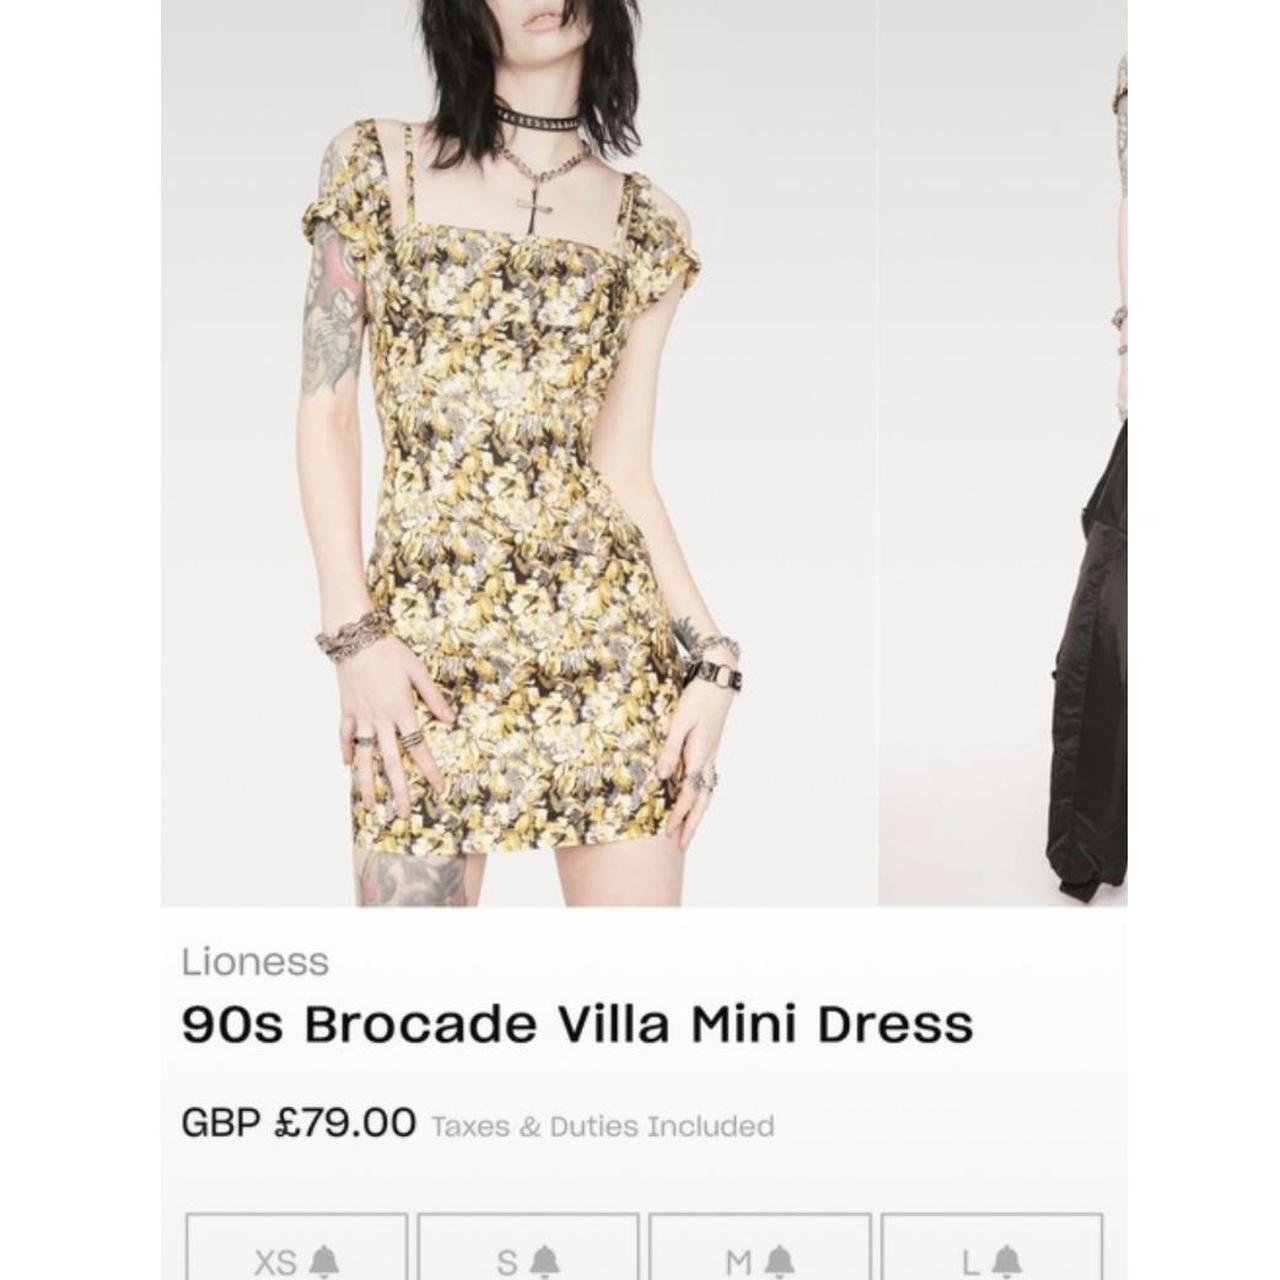 Yellow Lioness 90s brocade villa mini dress from... - Depop